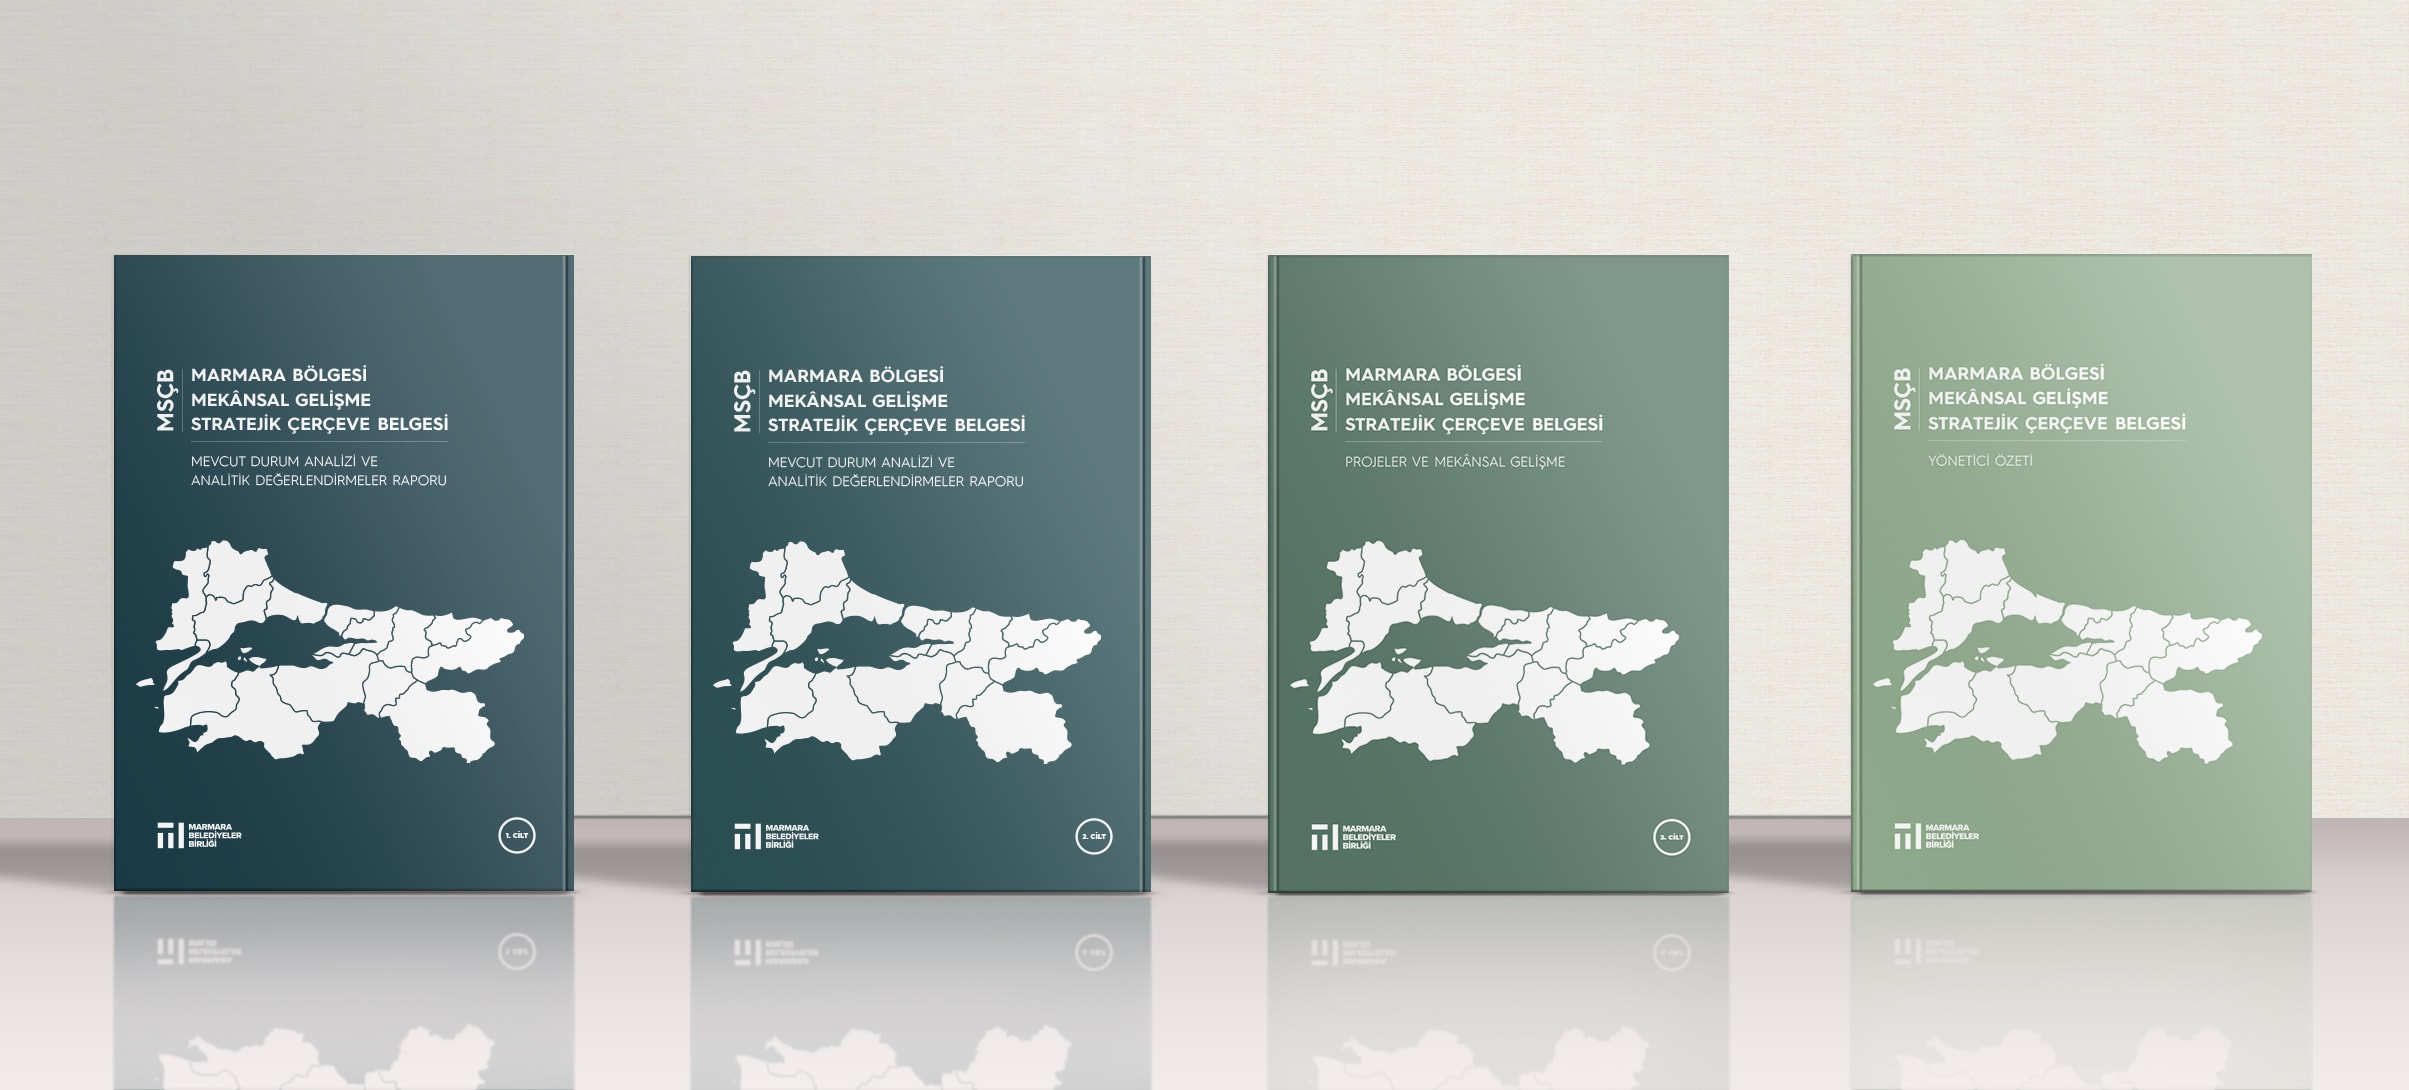 Marmara Region Spatial Development Strategic Framework Published}